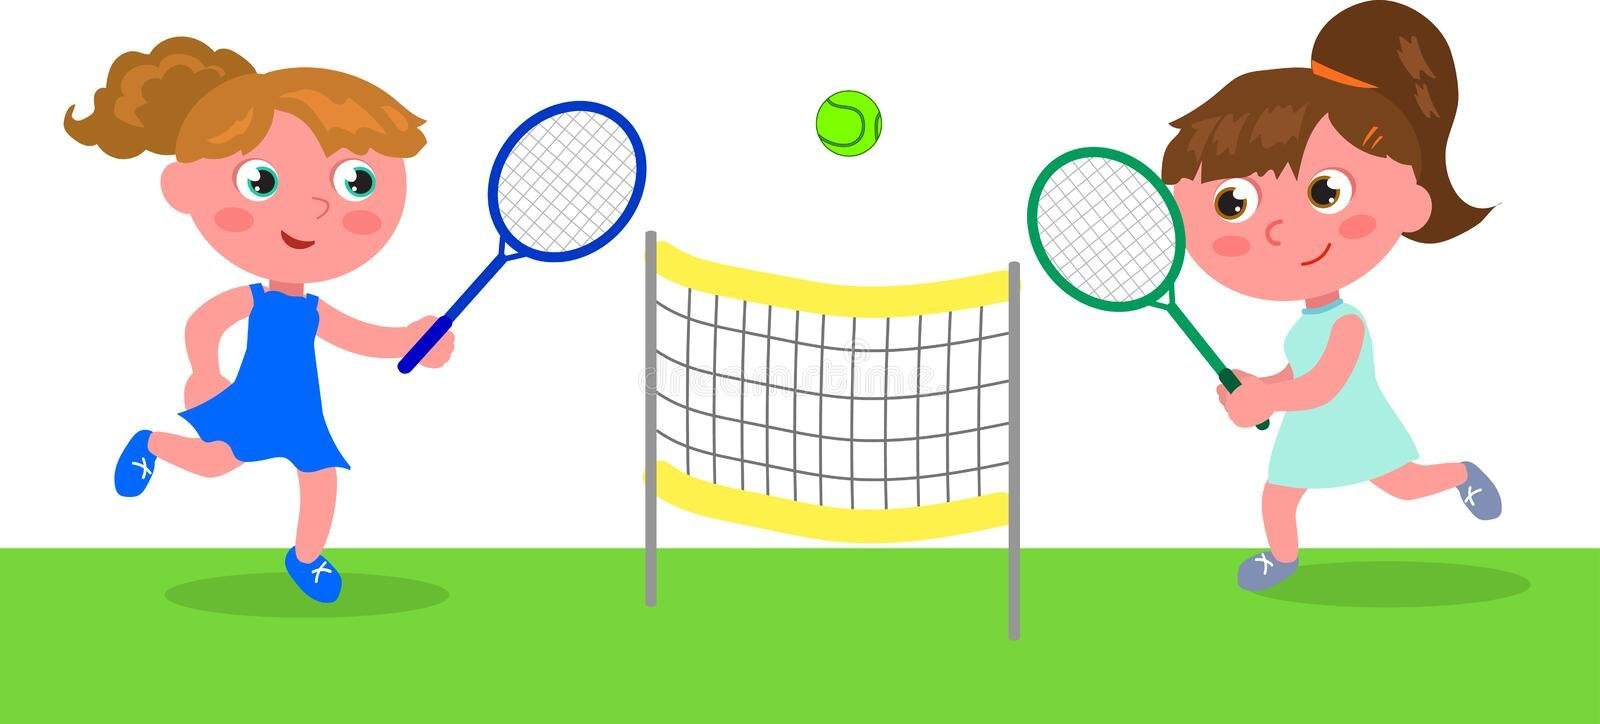 Теннис детский рисунок фото